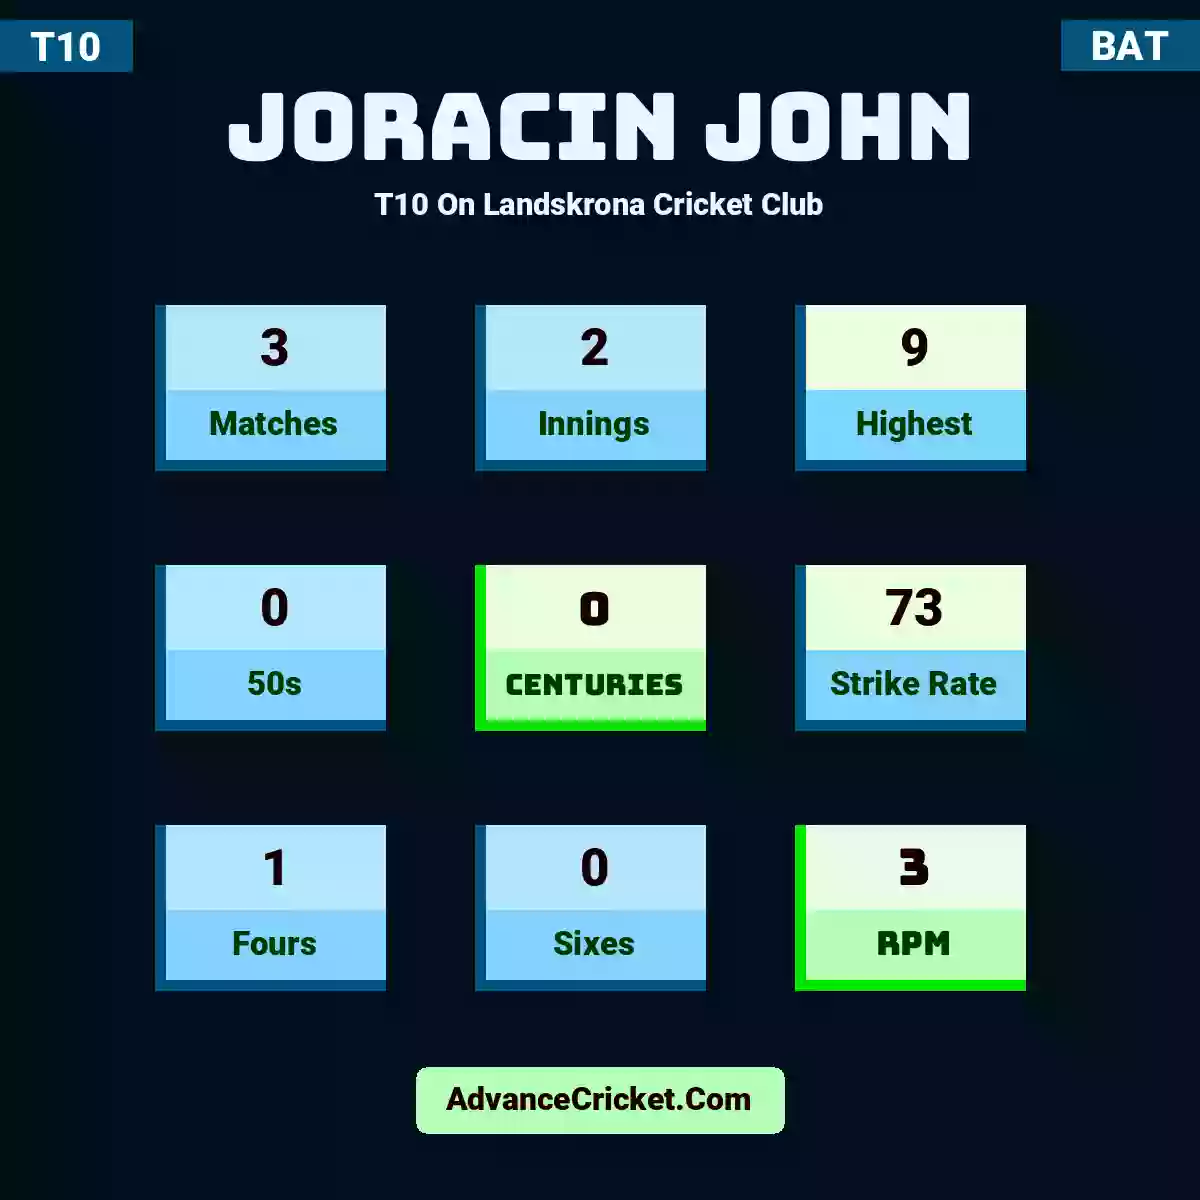 Joracin John T10  On Landskrona Cricket Club, Joracin John played 3 matches, scored 9 runs as highest, 0 half-centuries, and 0 centuries, with a strike rate of 73. J.John hit 1 fours and 0 sixes, with an RPM of 3.